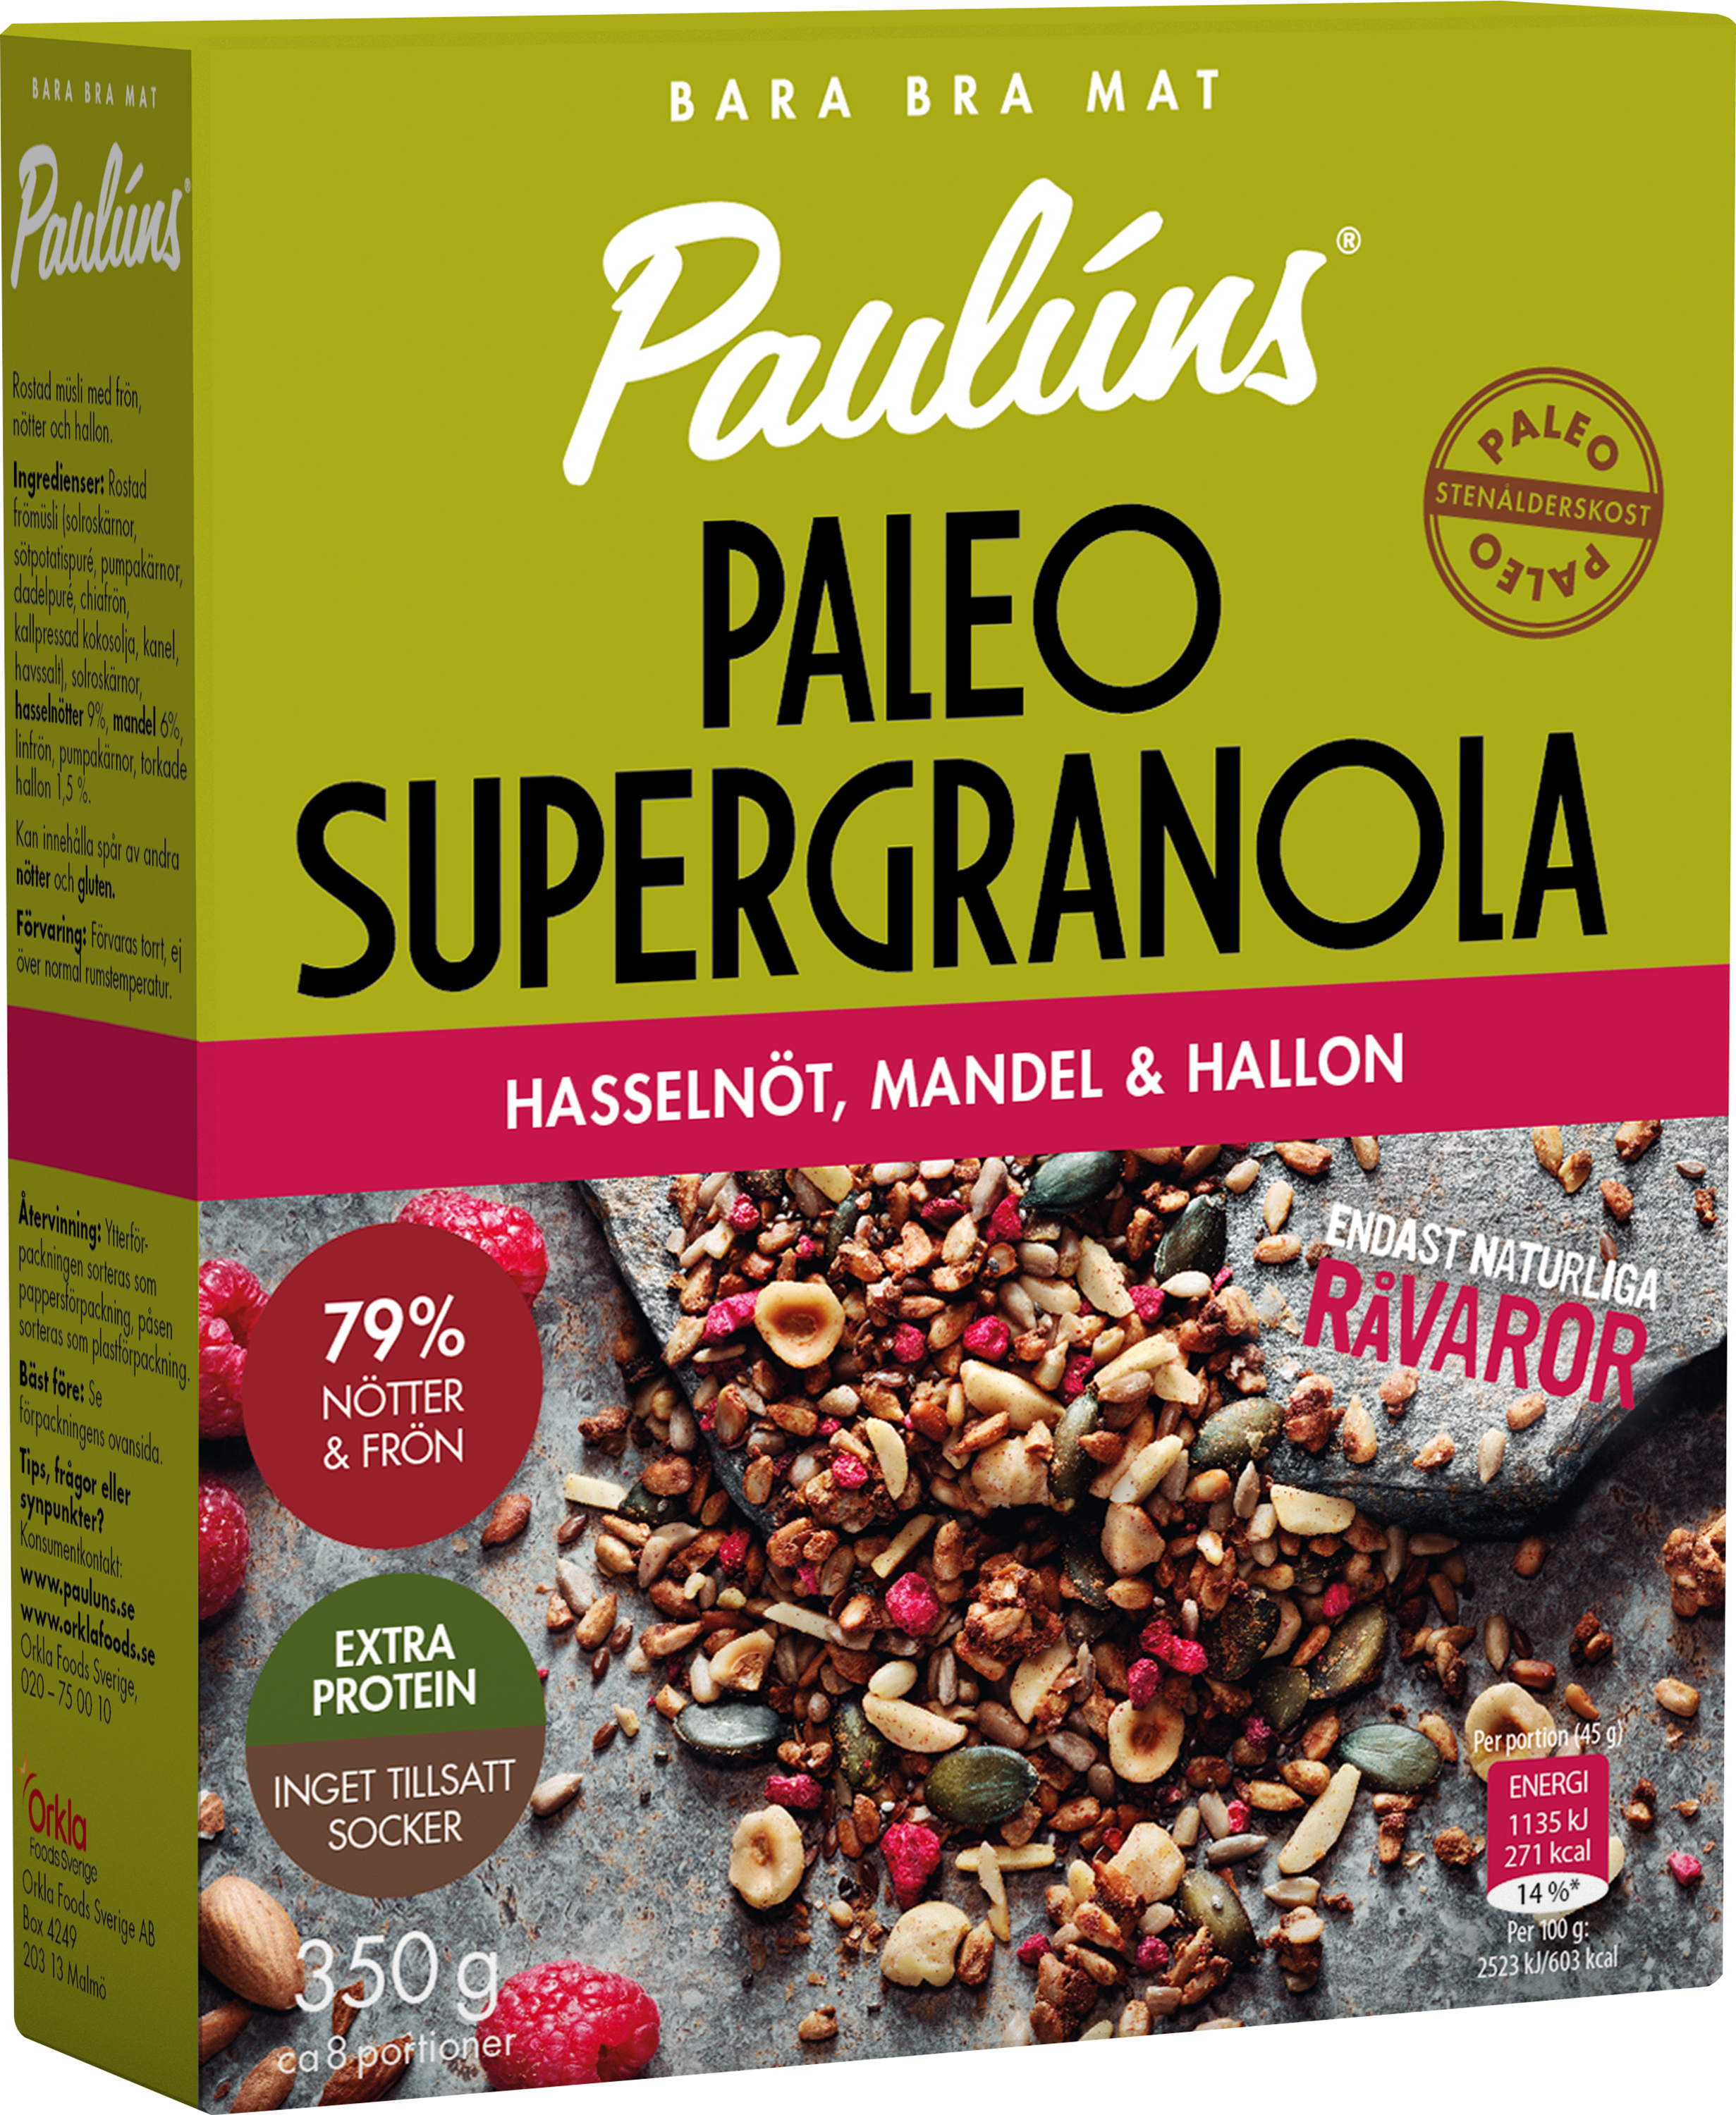 Paulúns Paleo Supergranola Hasselnöt, Mandel & Hallon 350 g